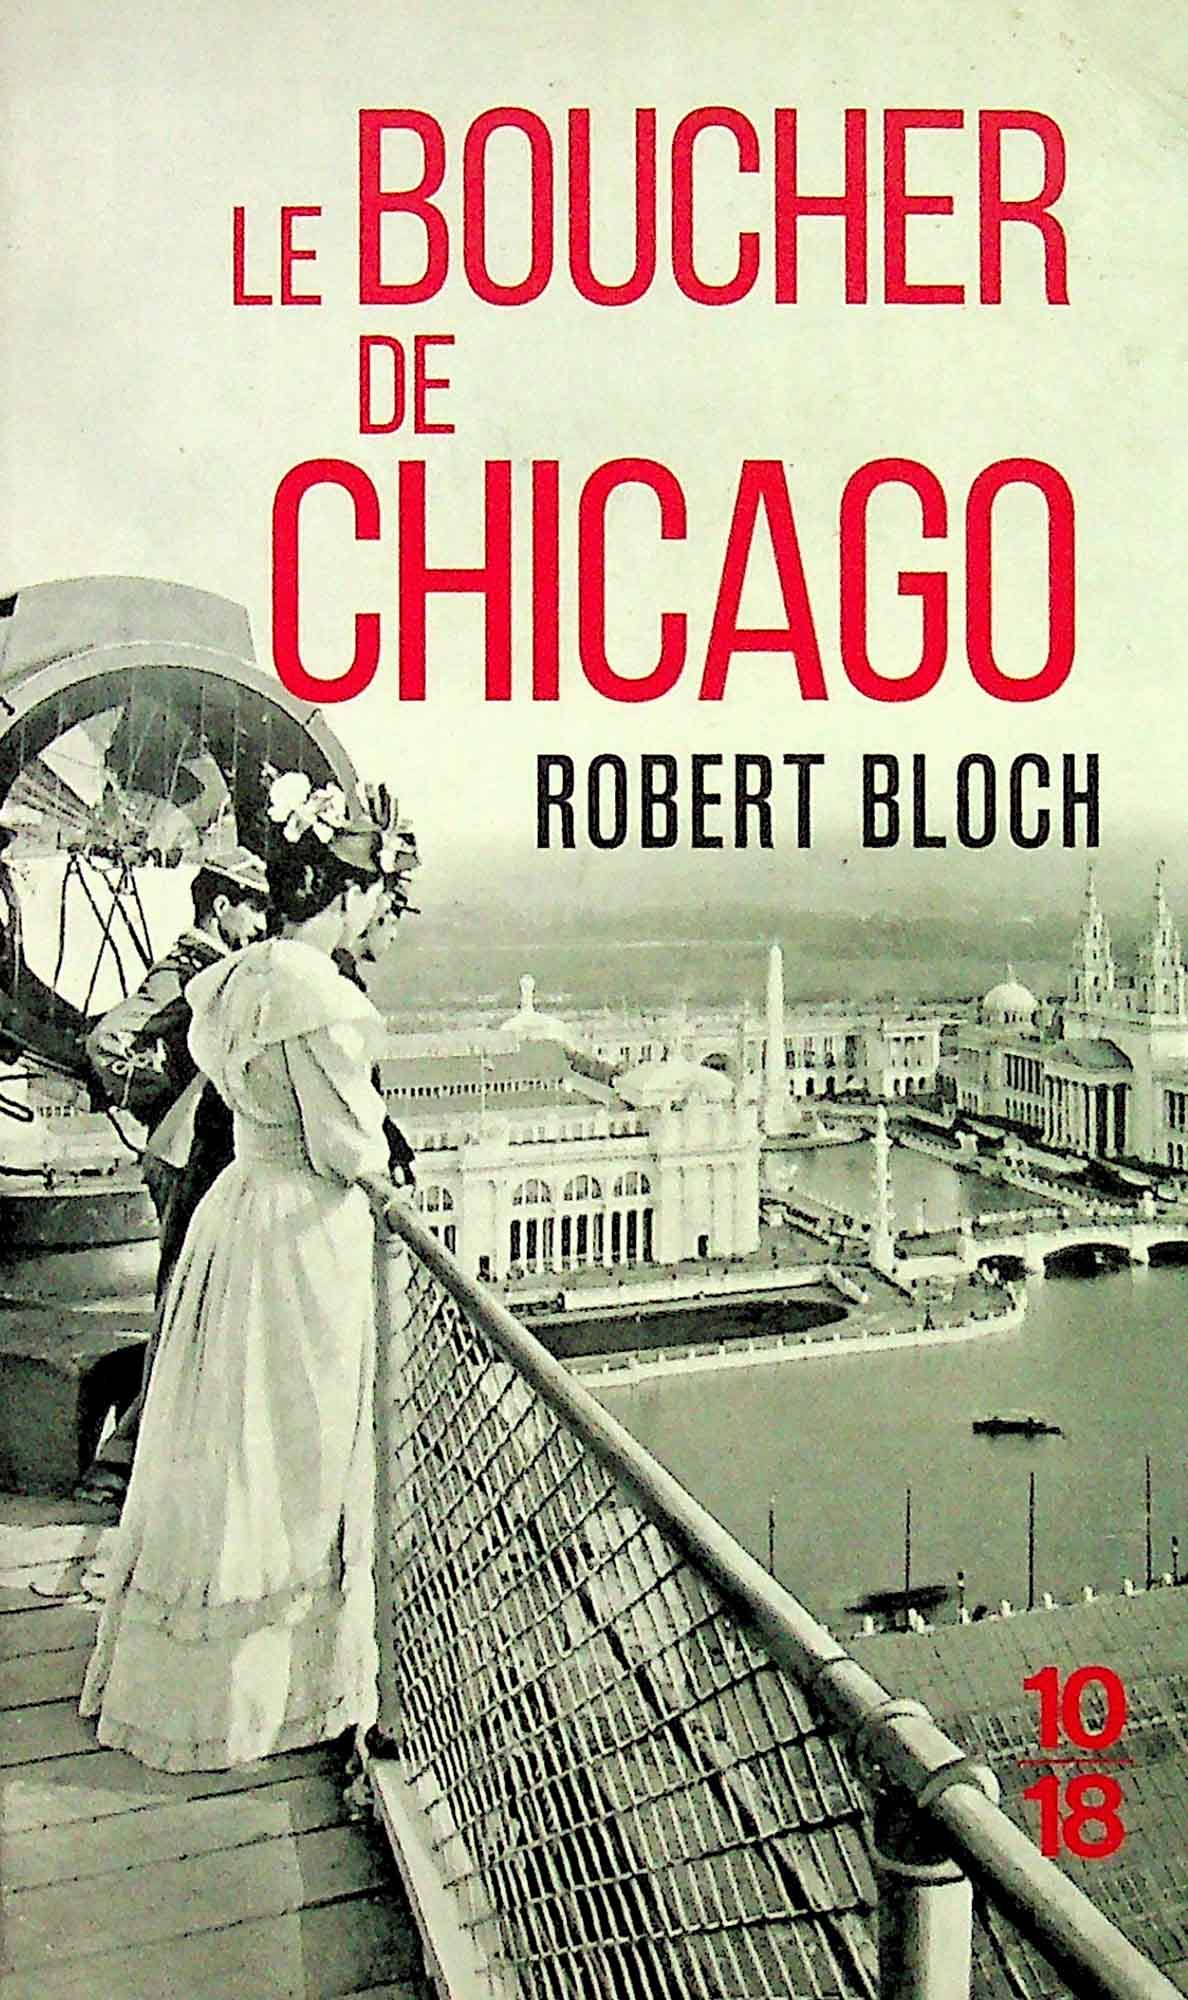 Le Boucher de Chicago Robert Bloch